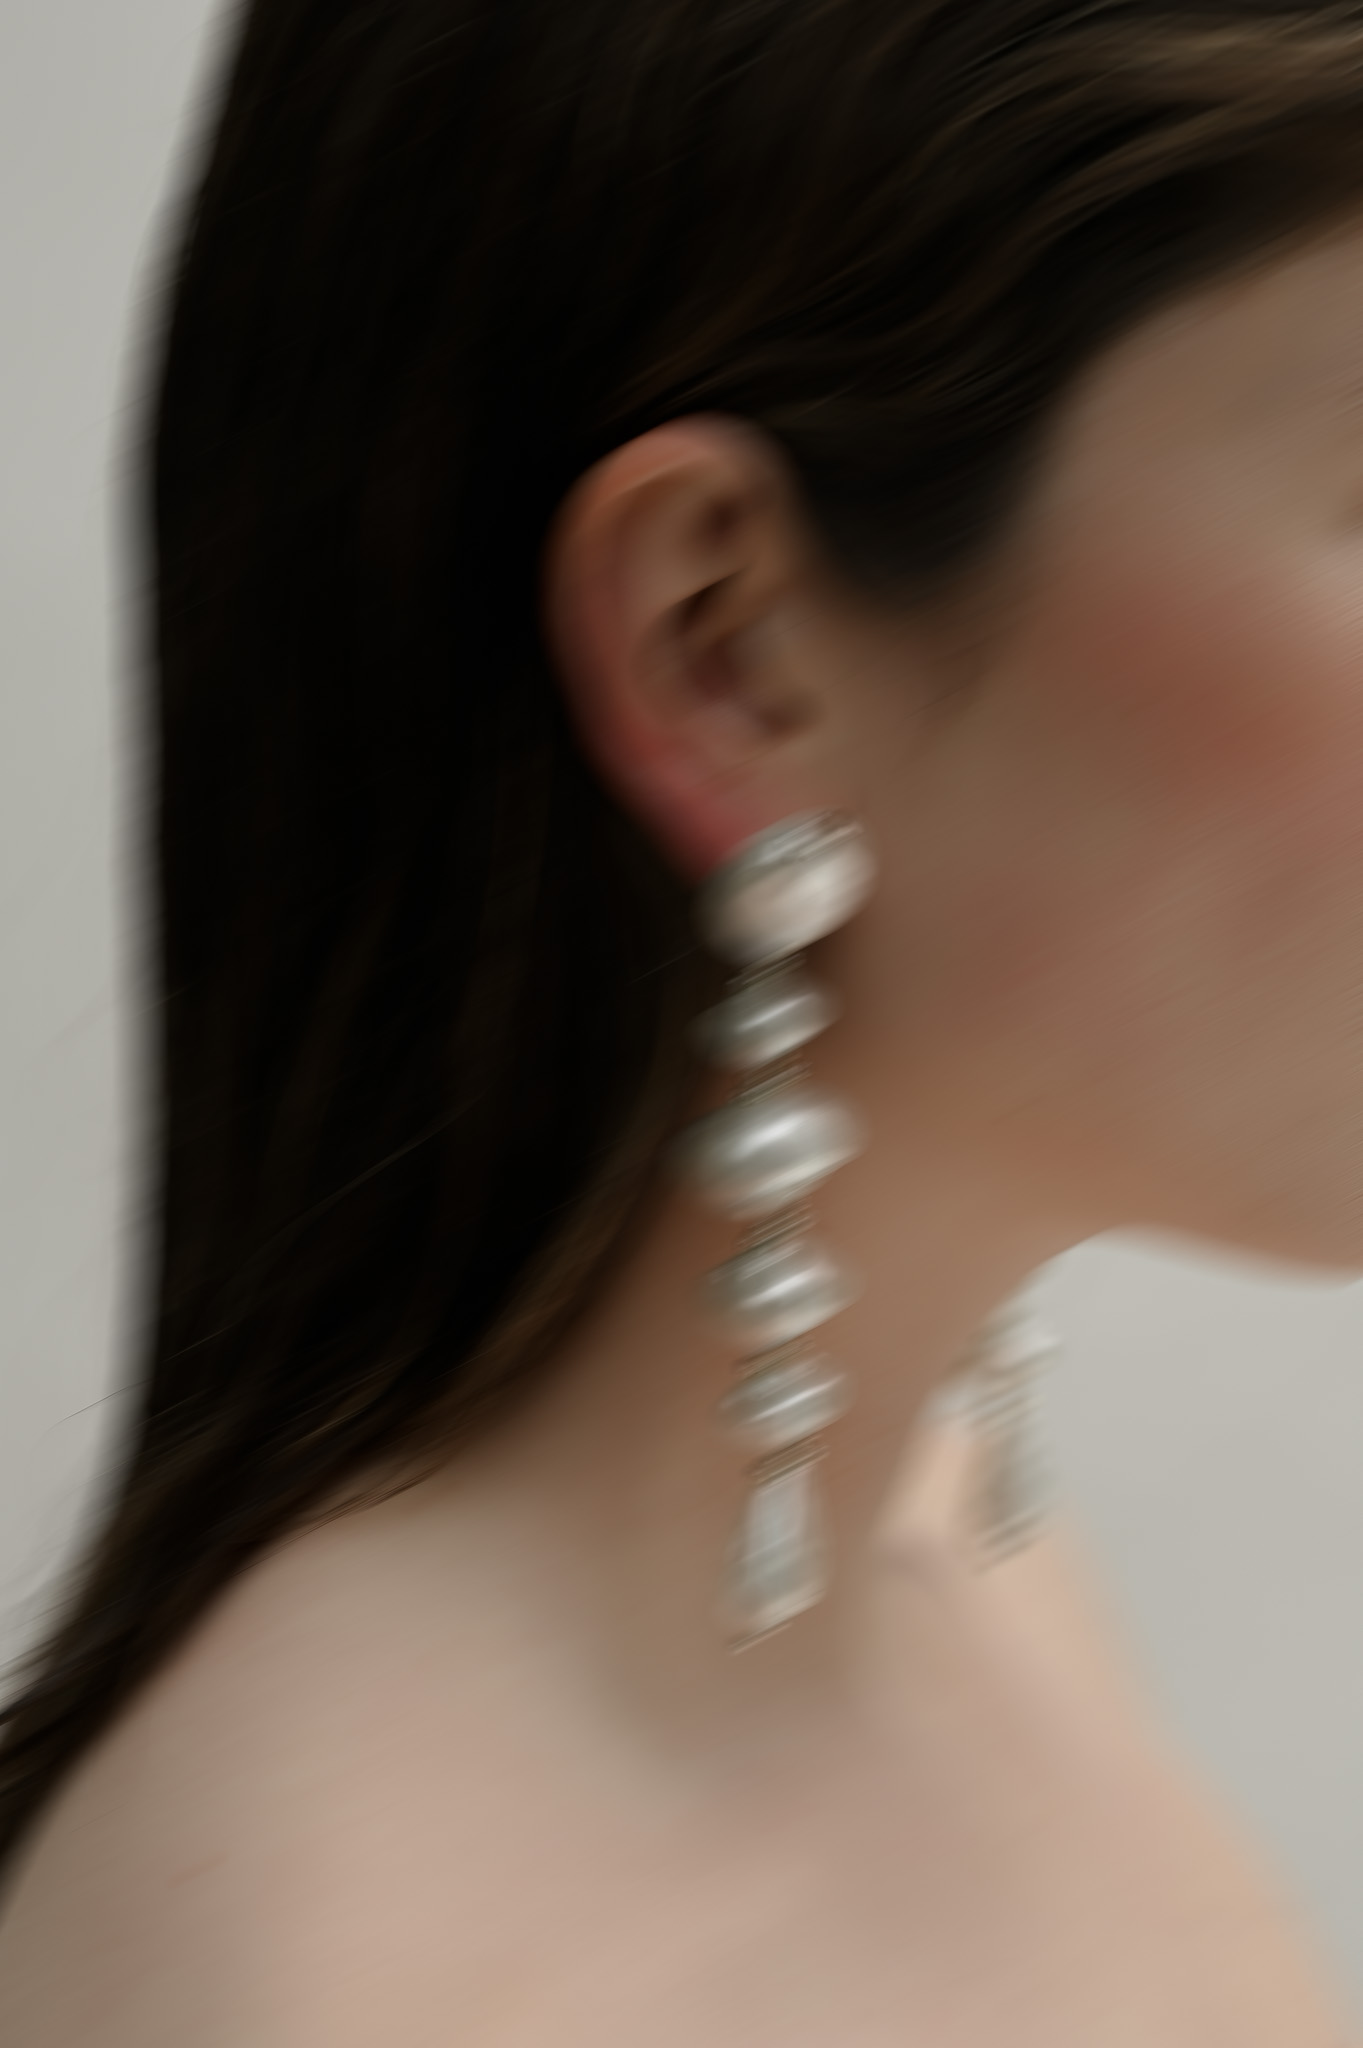 Dana wearing vintage pearl earrings